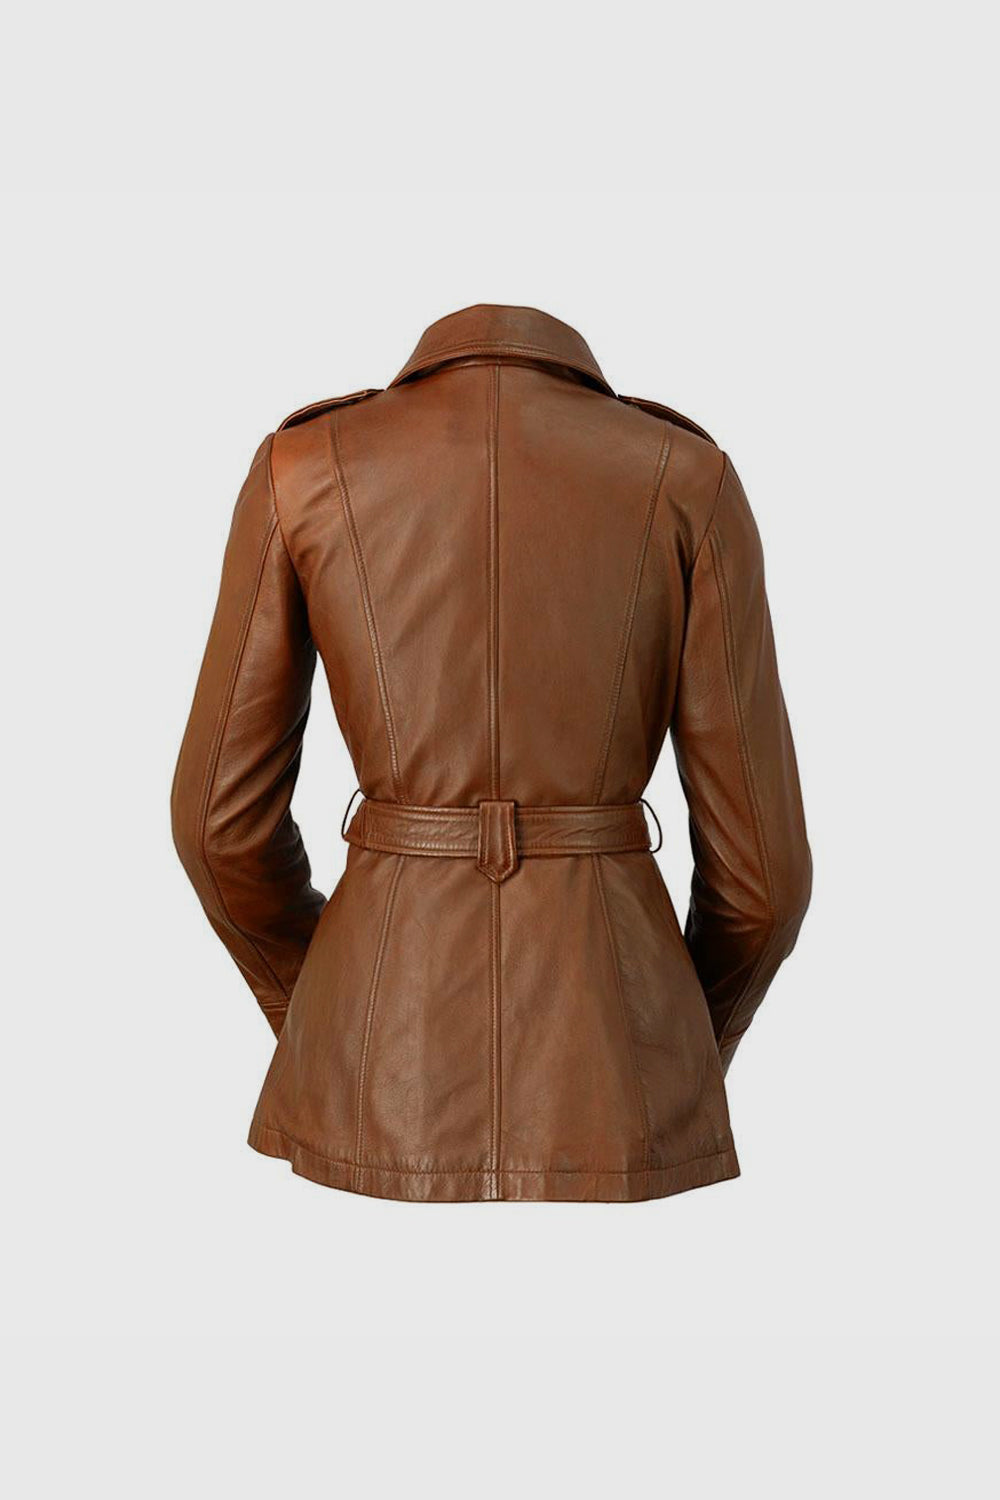 Traci Womens Leather Jacket Dark Cognac Women's Leather Jacket Whet Blu NYC   